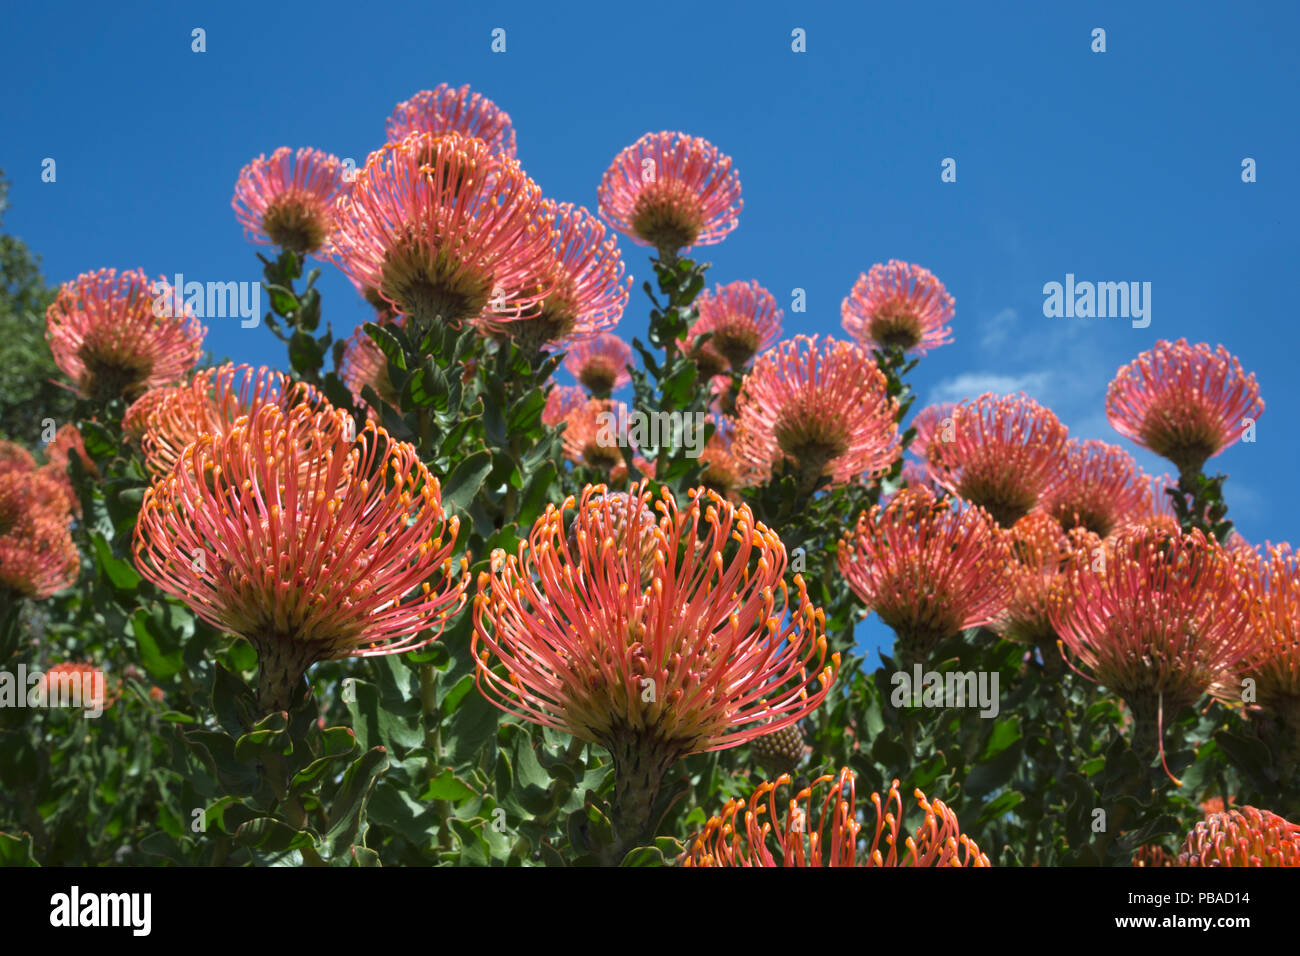 Pincushion protea (Leucospermum cordifolium), Kirstenbosch Botanical Gardens, Cape Town, South Africa Stock Photo